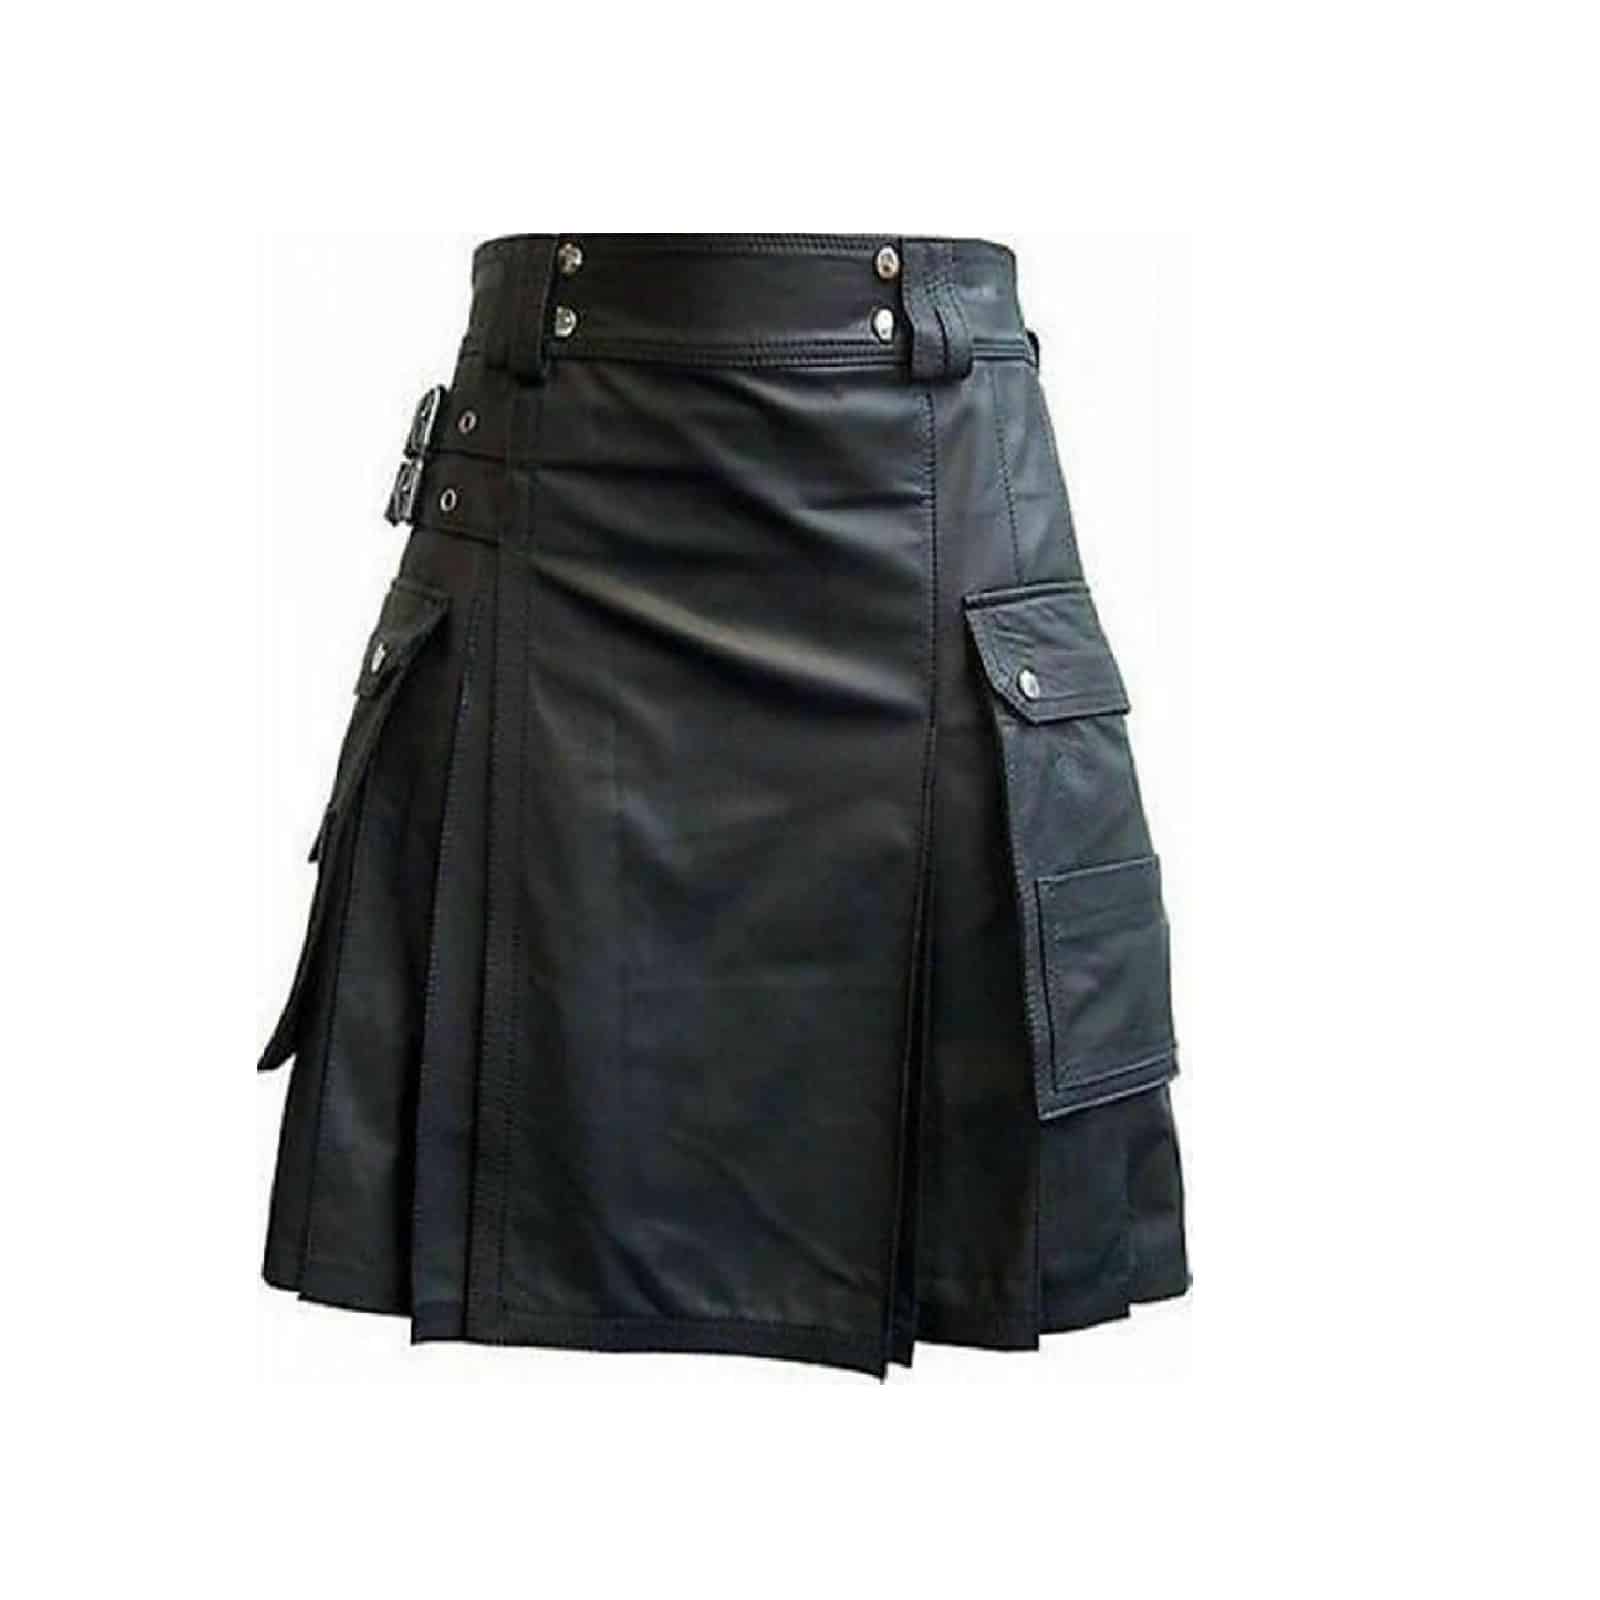 Black Leather Cargo Kilt | Utility Kilts For Sale Nov 2020 - Rocketkilts